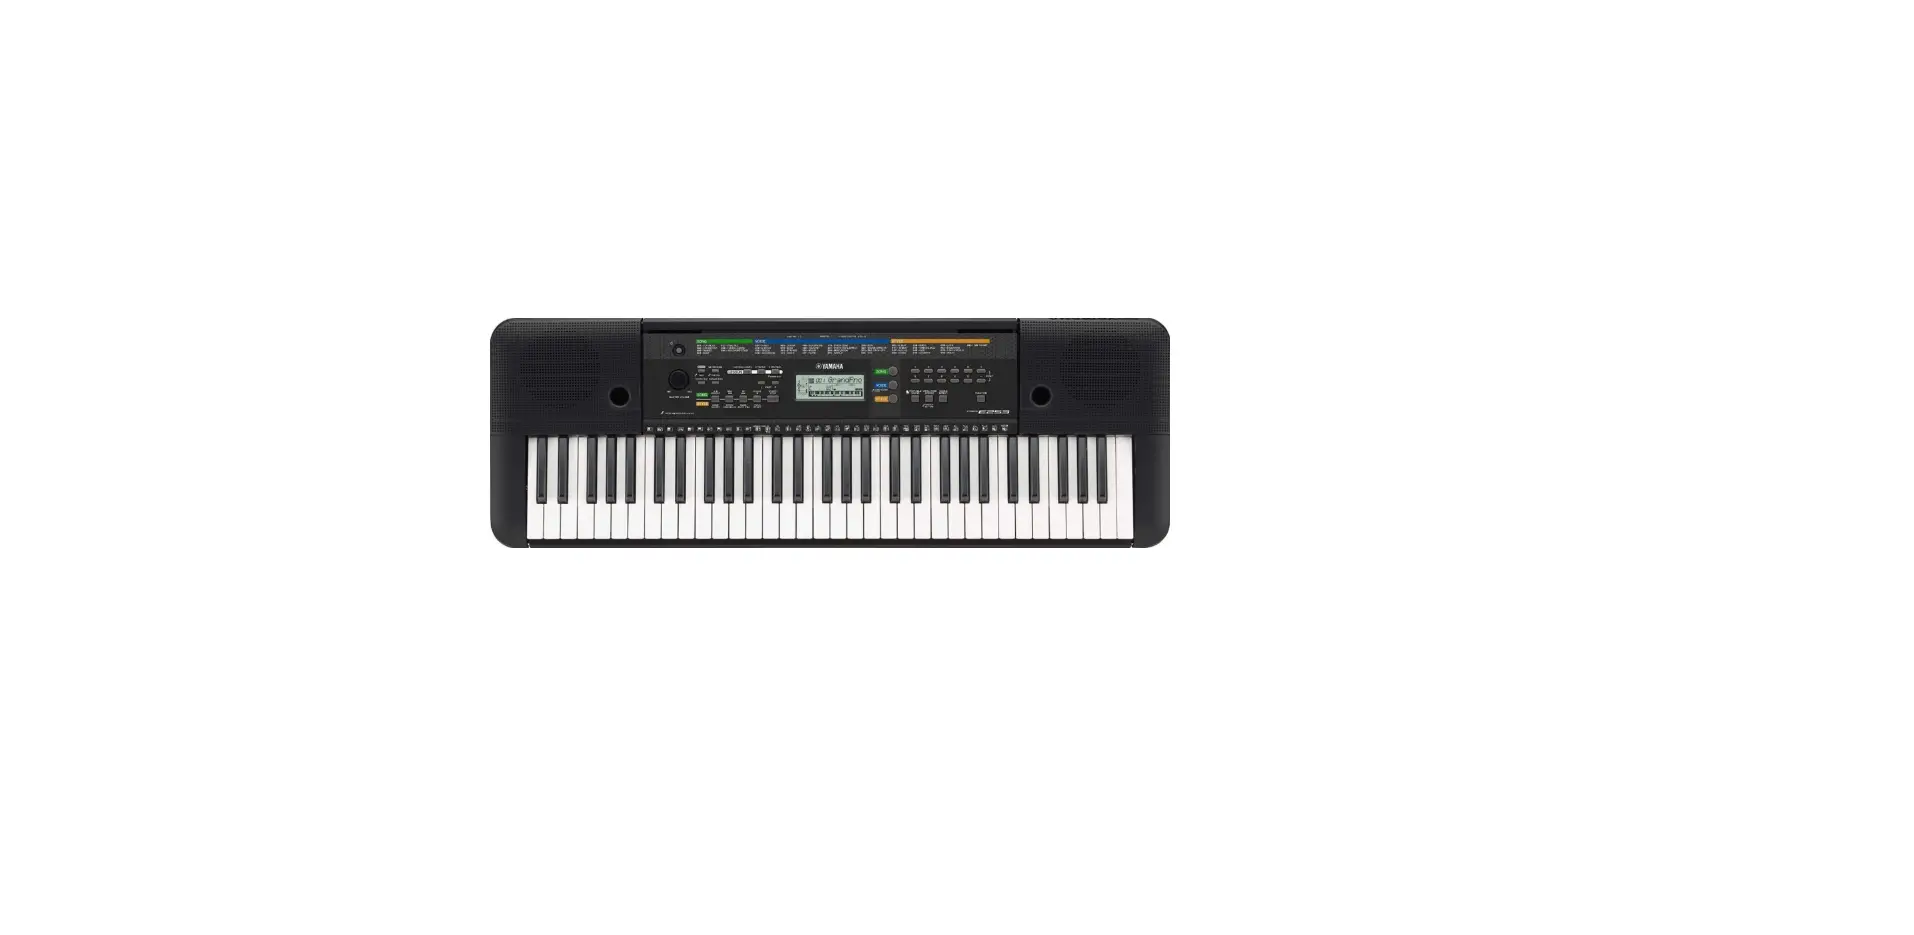 YPT 300 - Full Size Enhanced Teaching System Music Keyboard